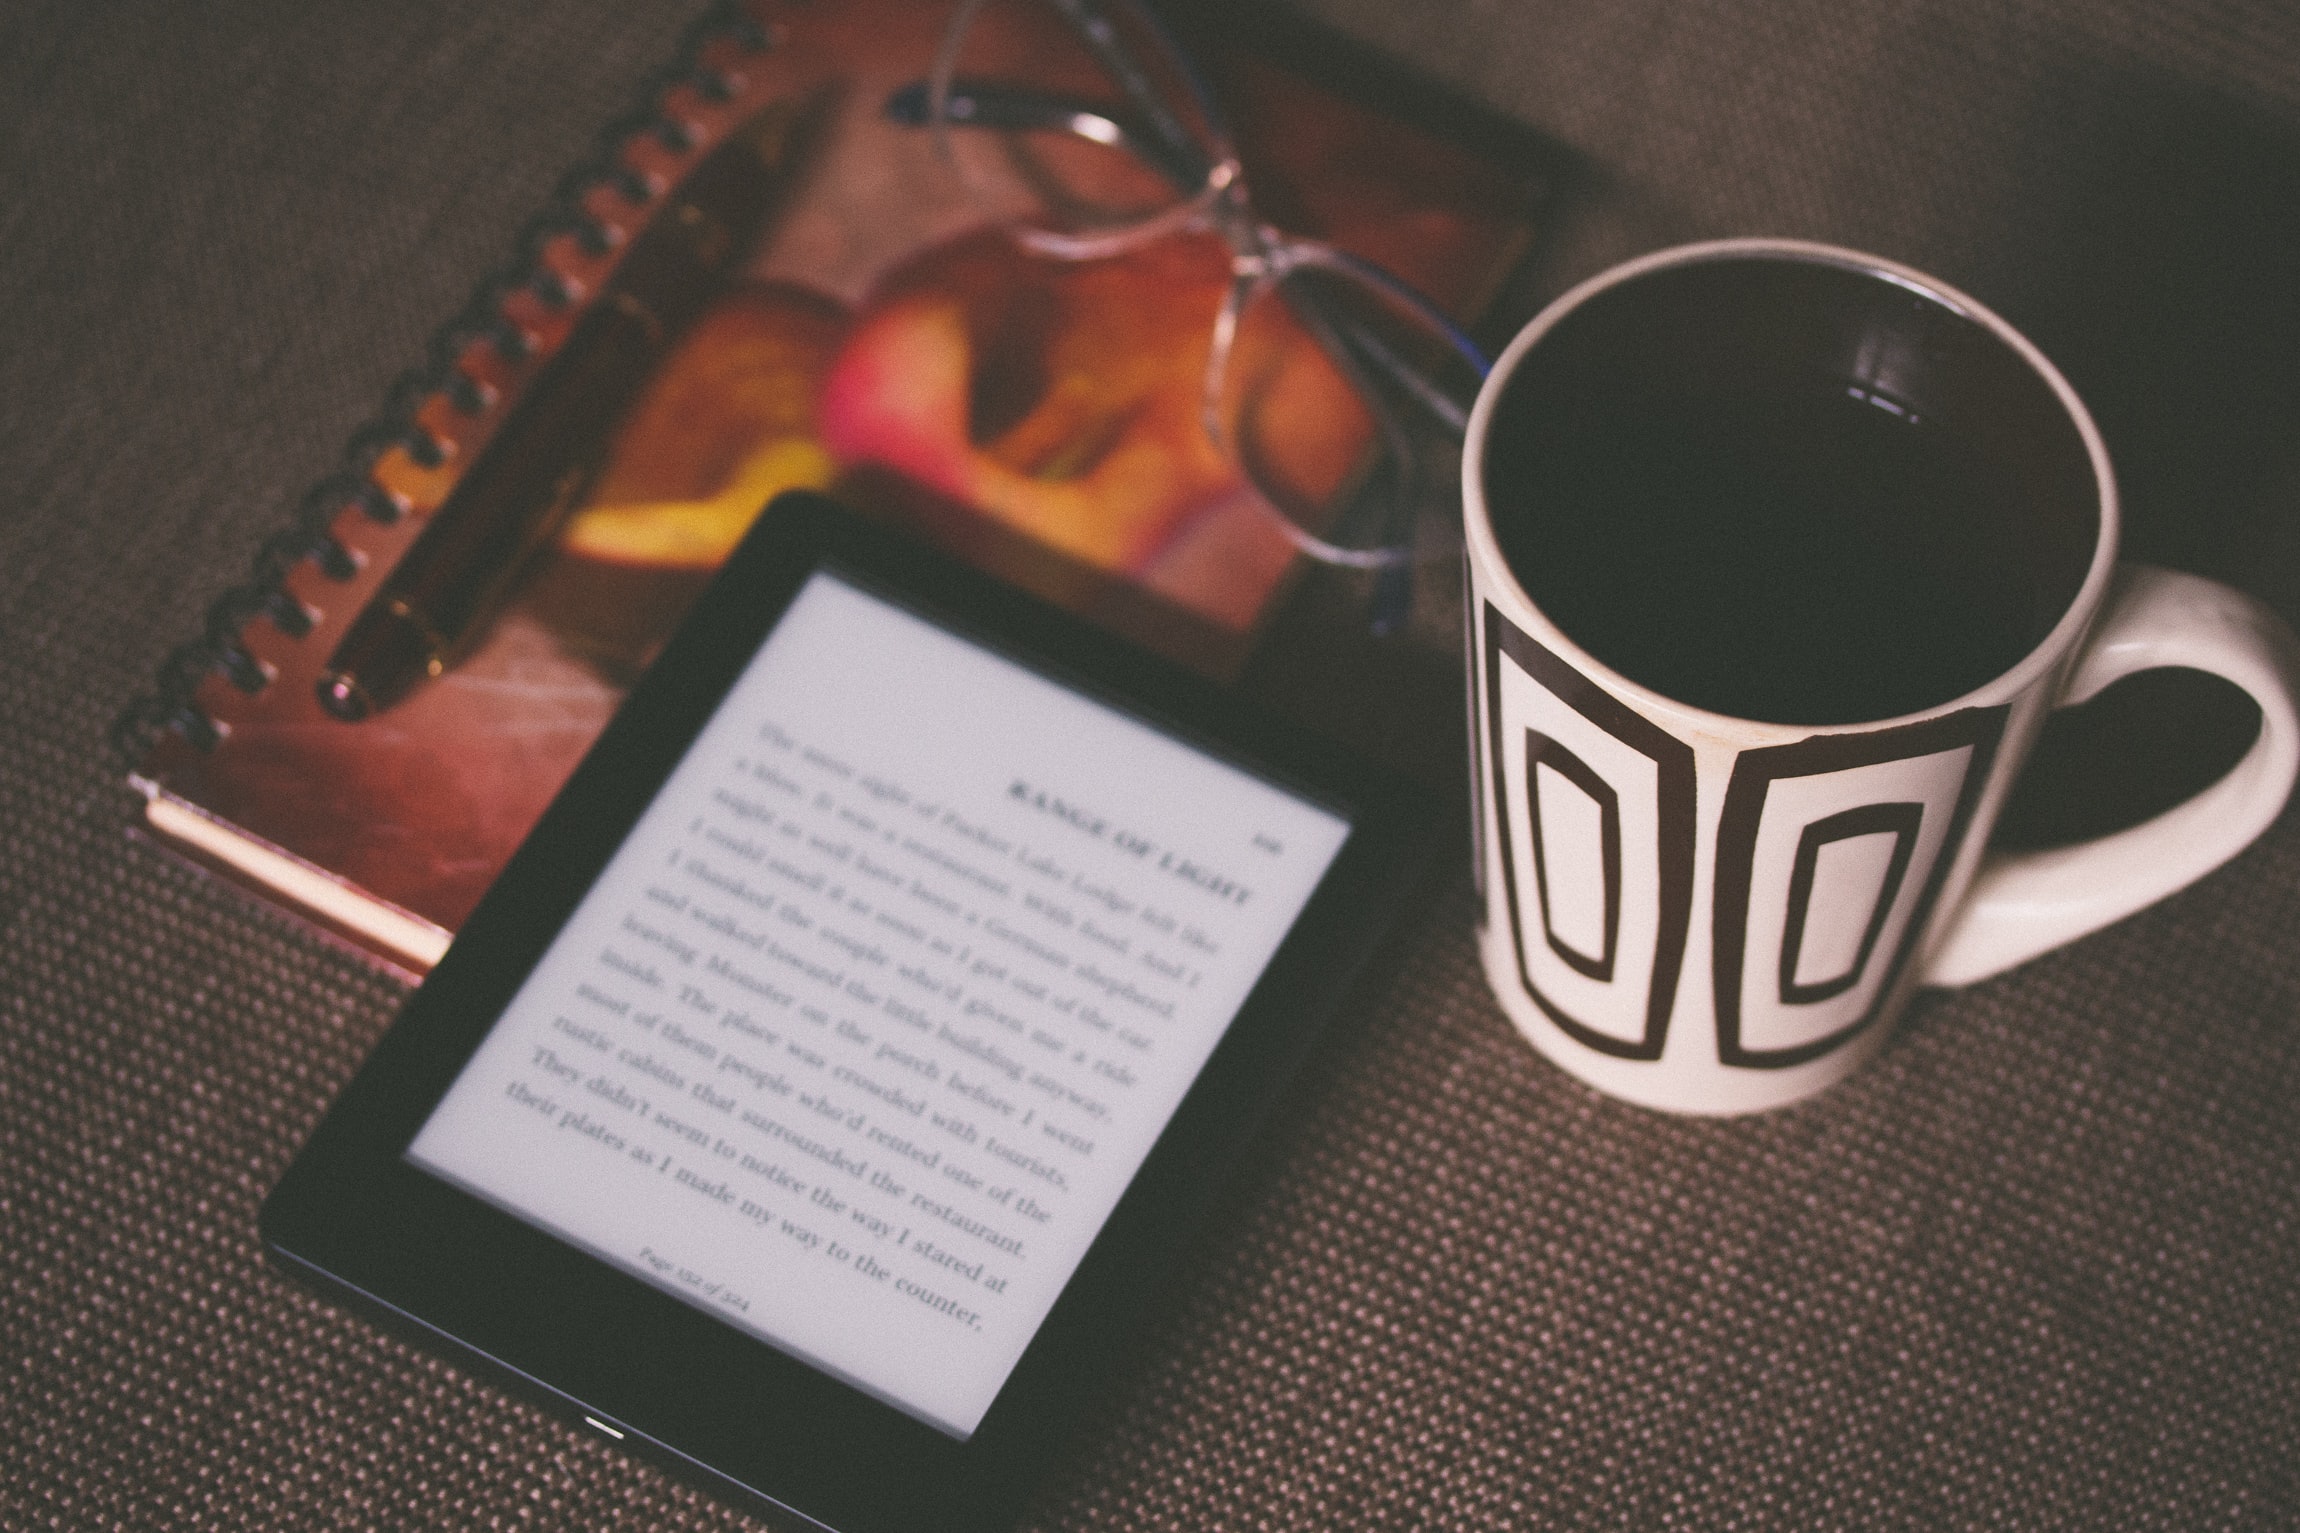 Ebook publishing platform open on a table beside a mug of coffee